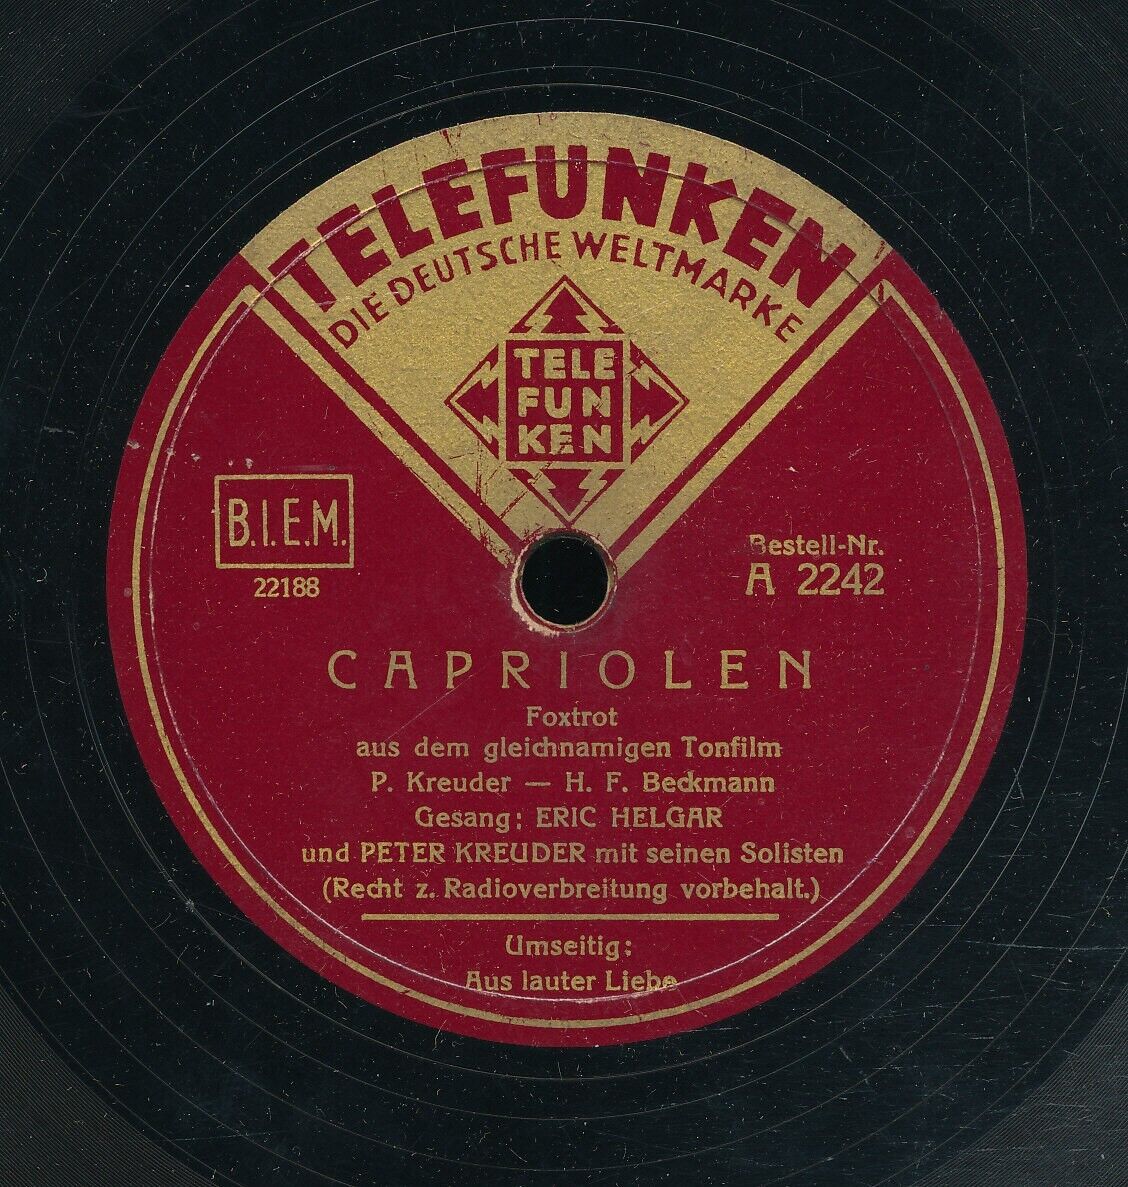 78tk-ethnic German-TELEFUNKEN 2242-Peter Kreuder O.-(Capriolen/Aus Lauter Liebe)